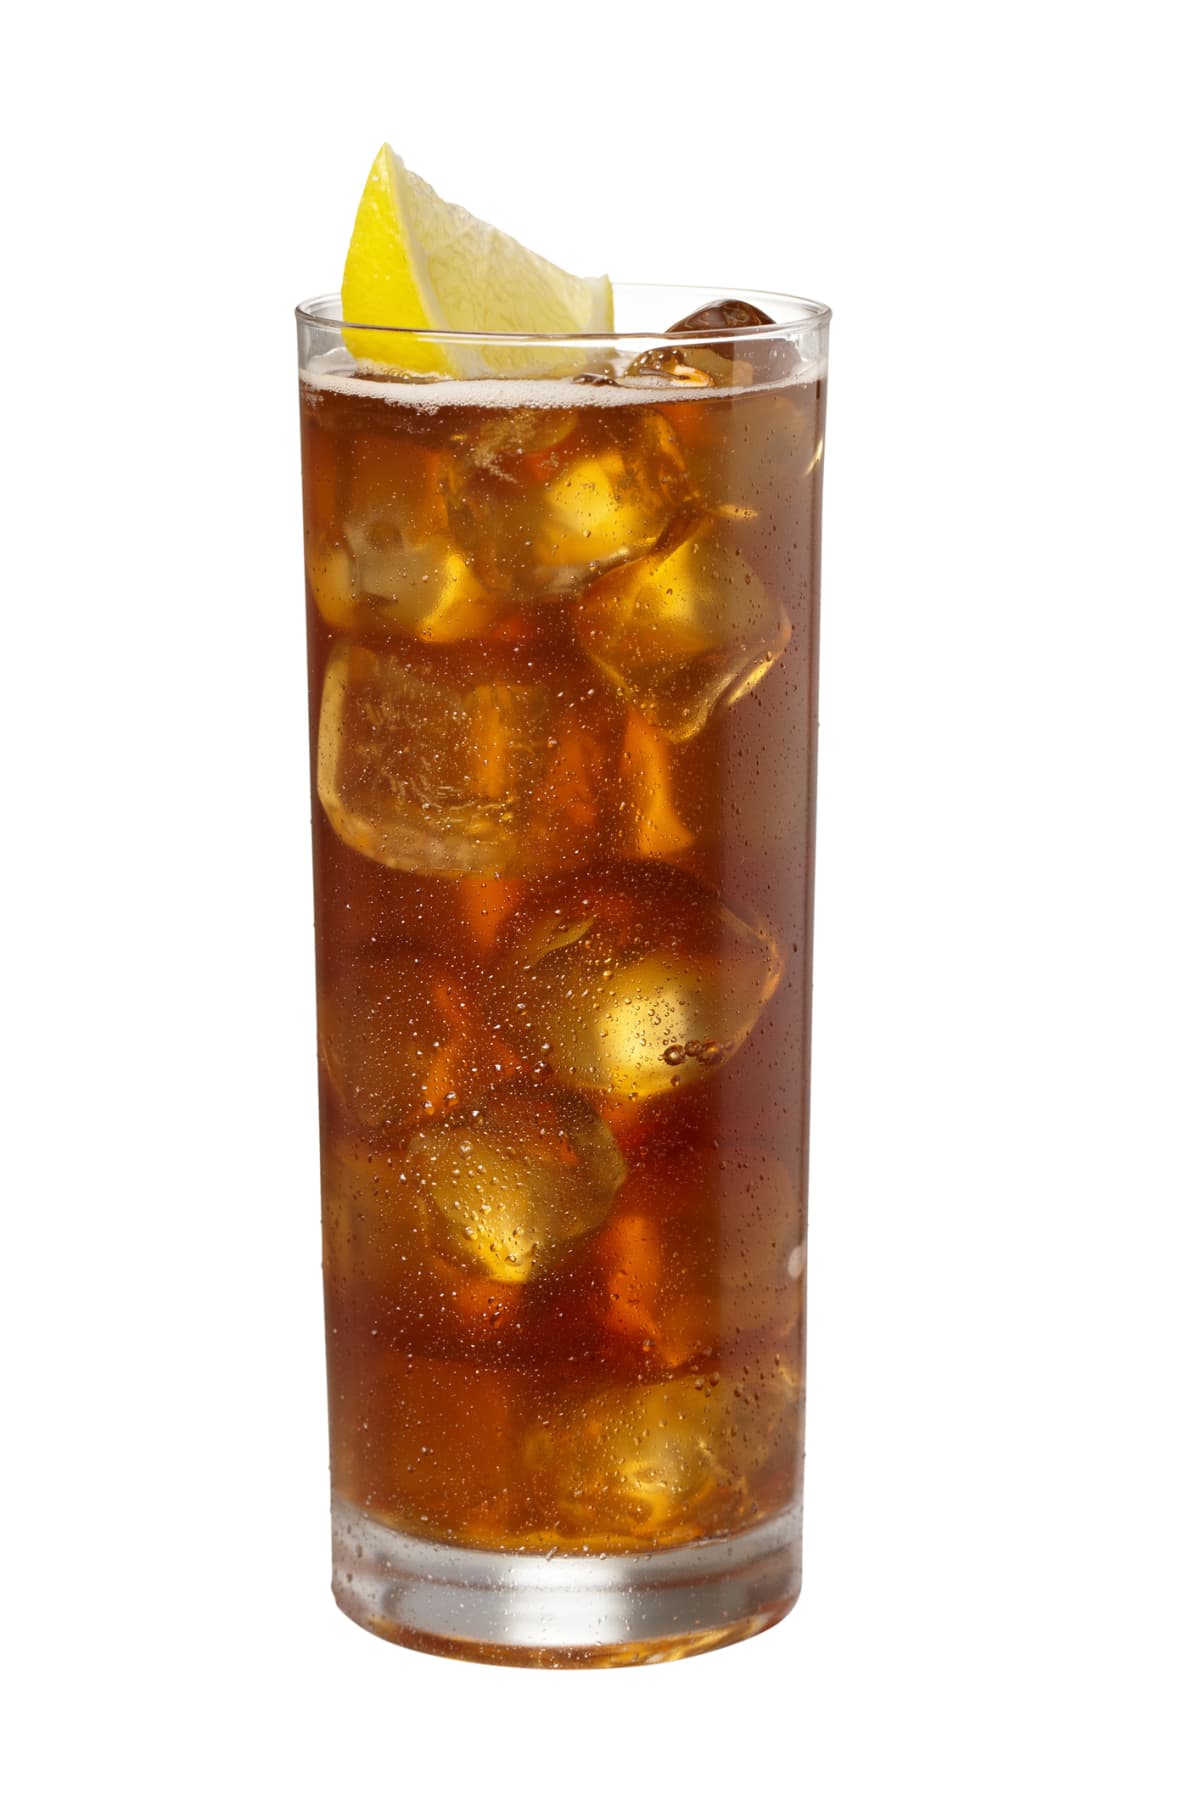 A tall glass of iced tea with a lemon wedge